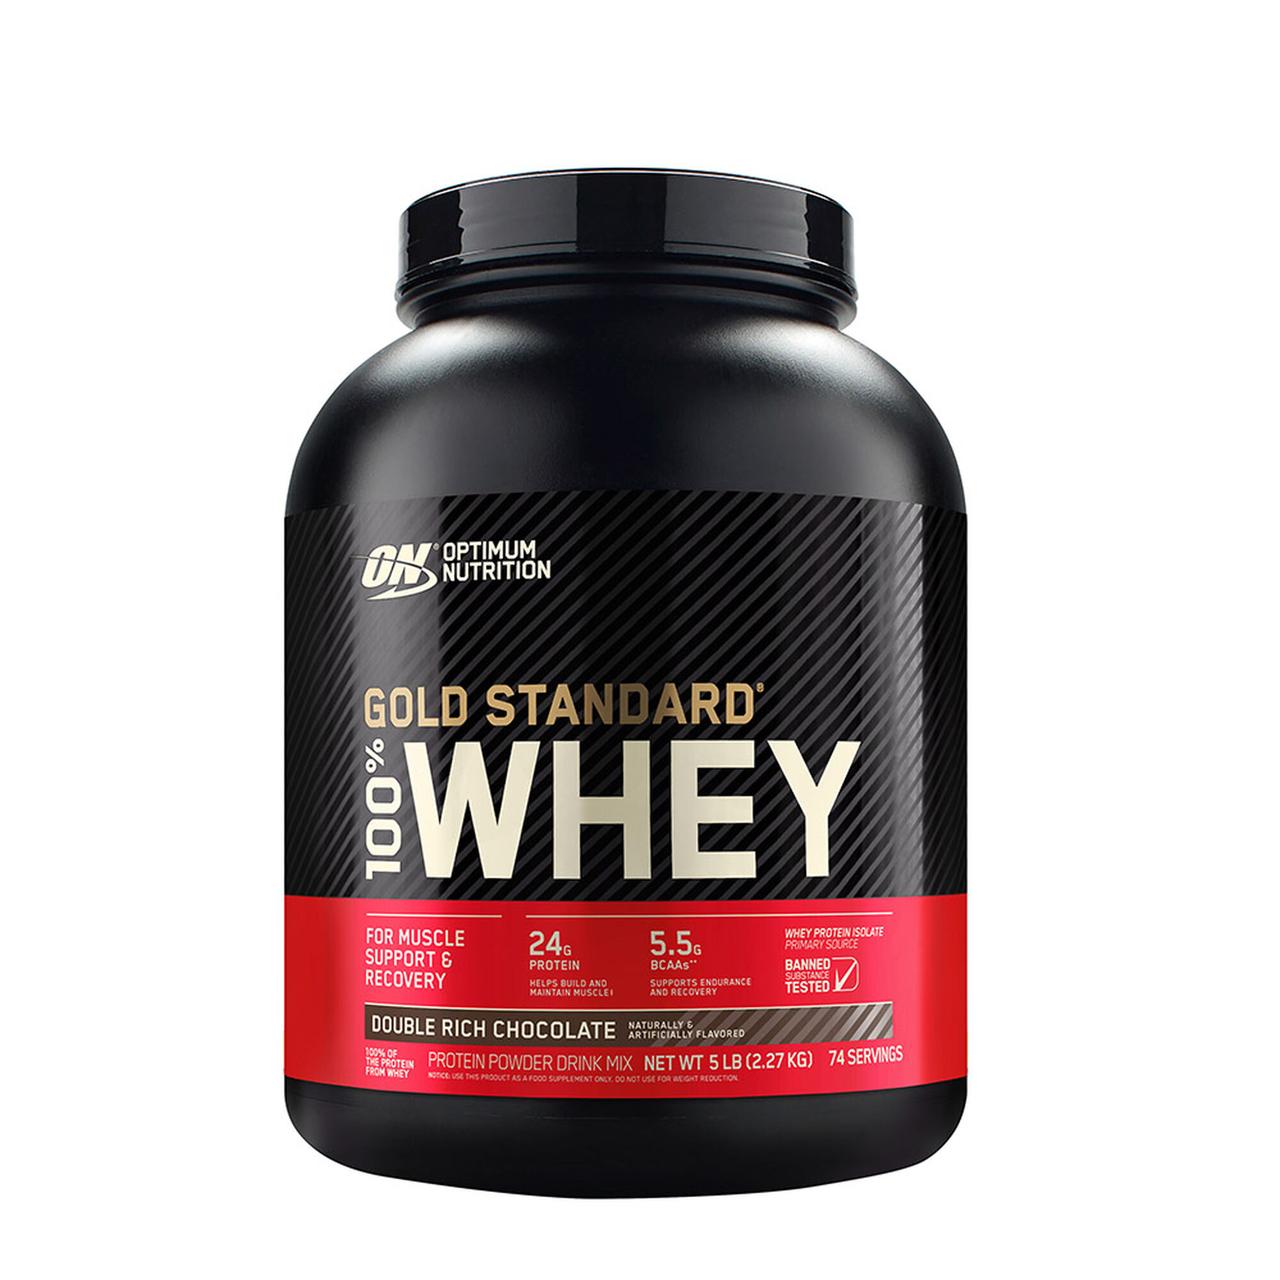 Сывороточный протеин изолят Optimum Nutrition 100% Whey Gold Standard (2.3 кг) оптимум вей голд стандарт double rich chocolate,  мл, Optimum Nutrition. Сывороточный изолят